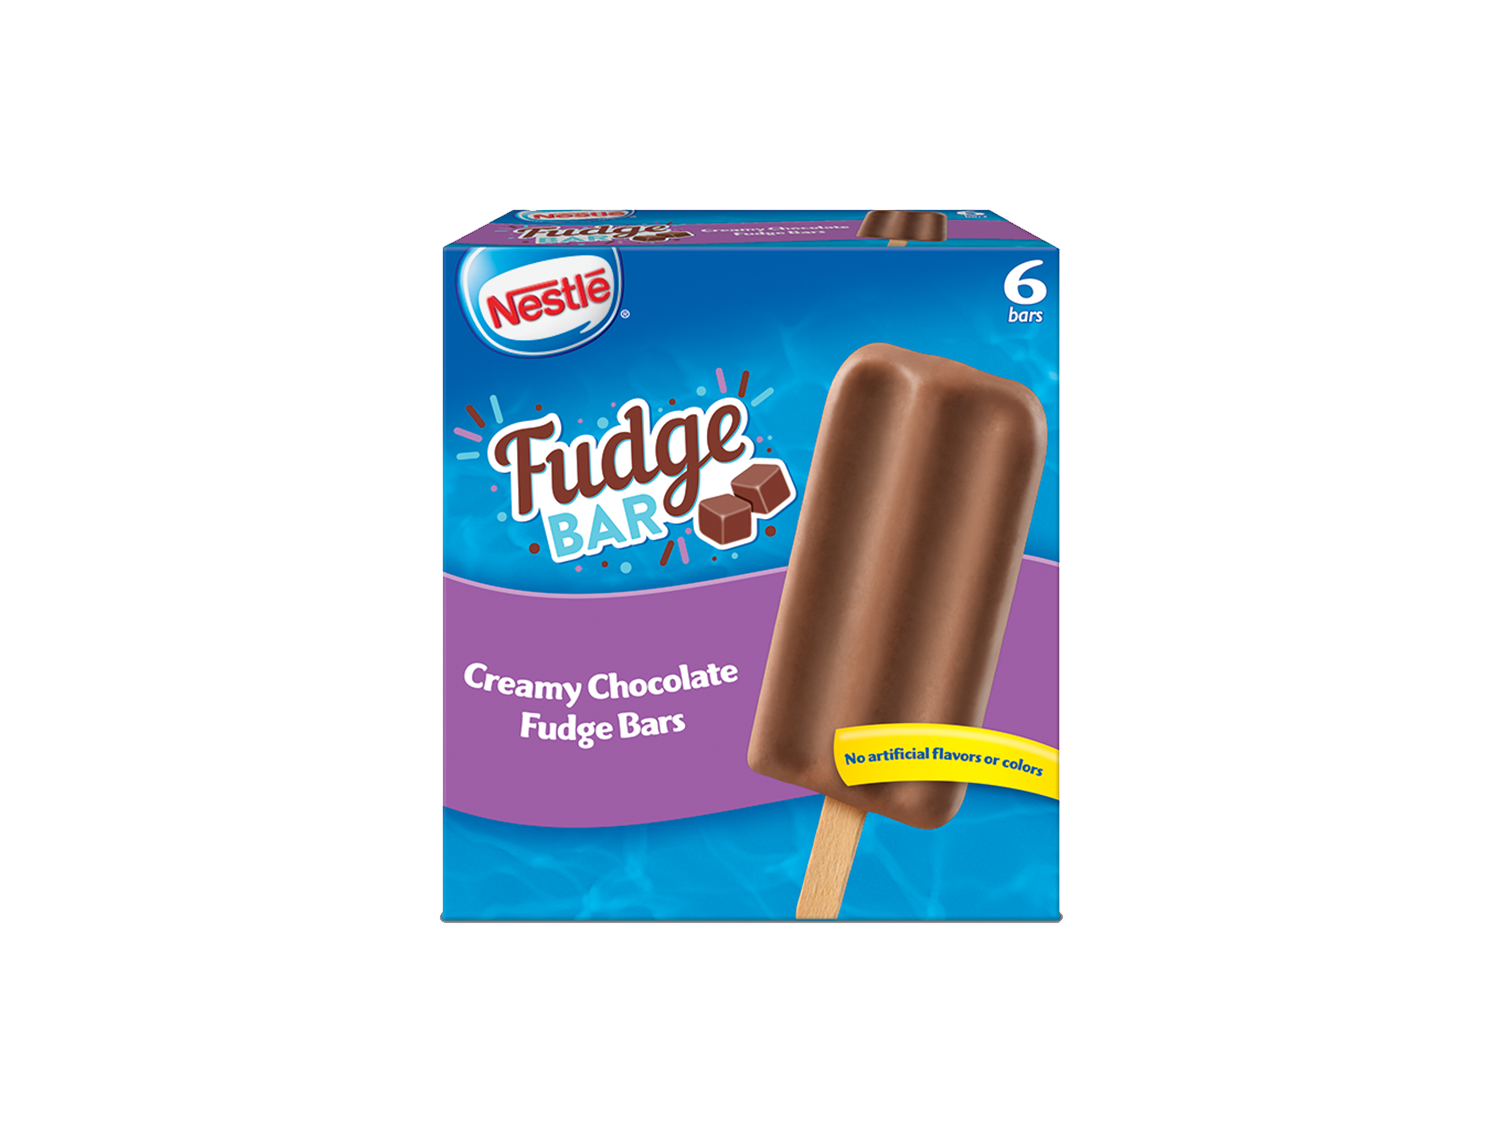 Box of Nestle Creamy Chocolate Fudge Bars